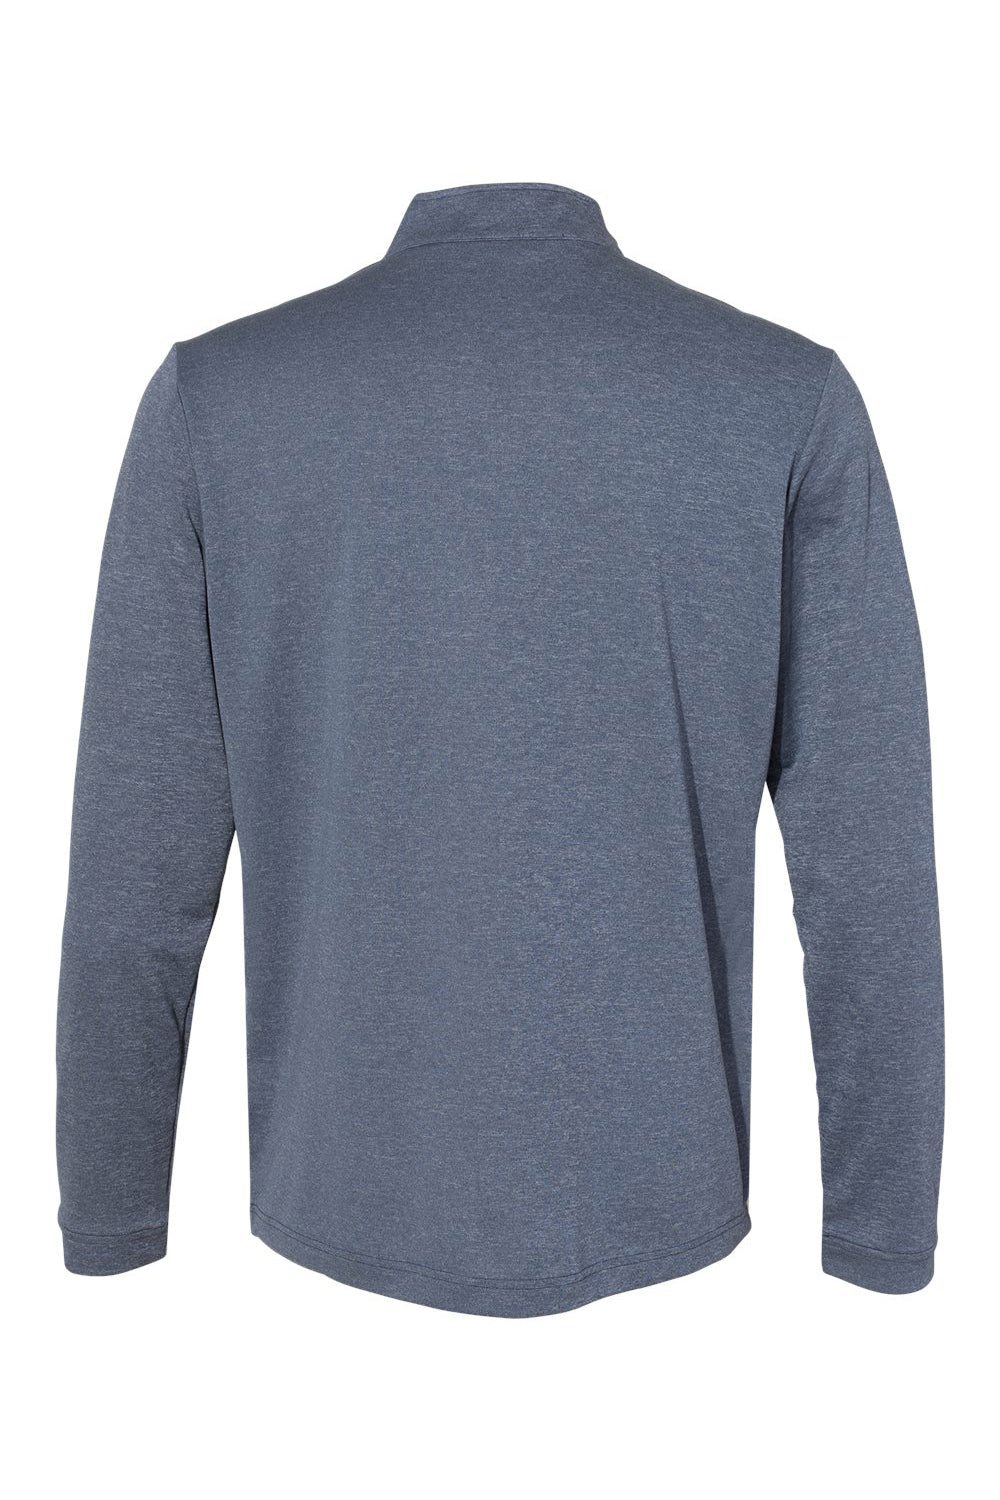 Adidas A280 Mens UPF 50+ 1/4 Zip Sweatshirt Heather Collegiate Navy Blue/Carbon Grey Flat Back